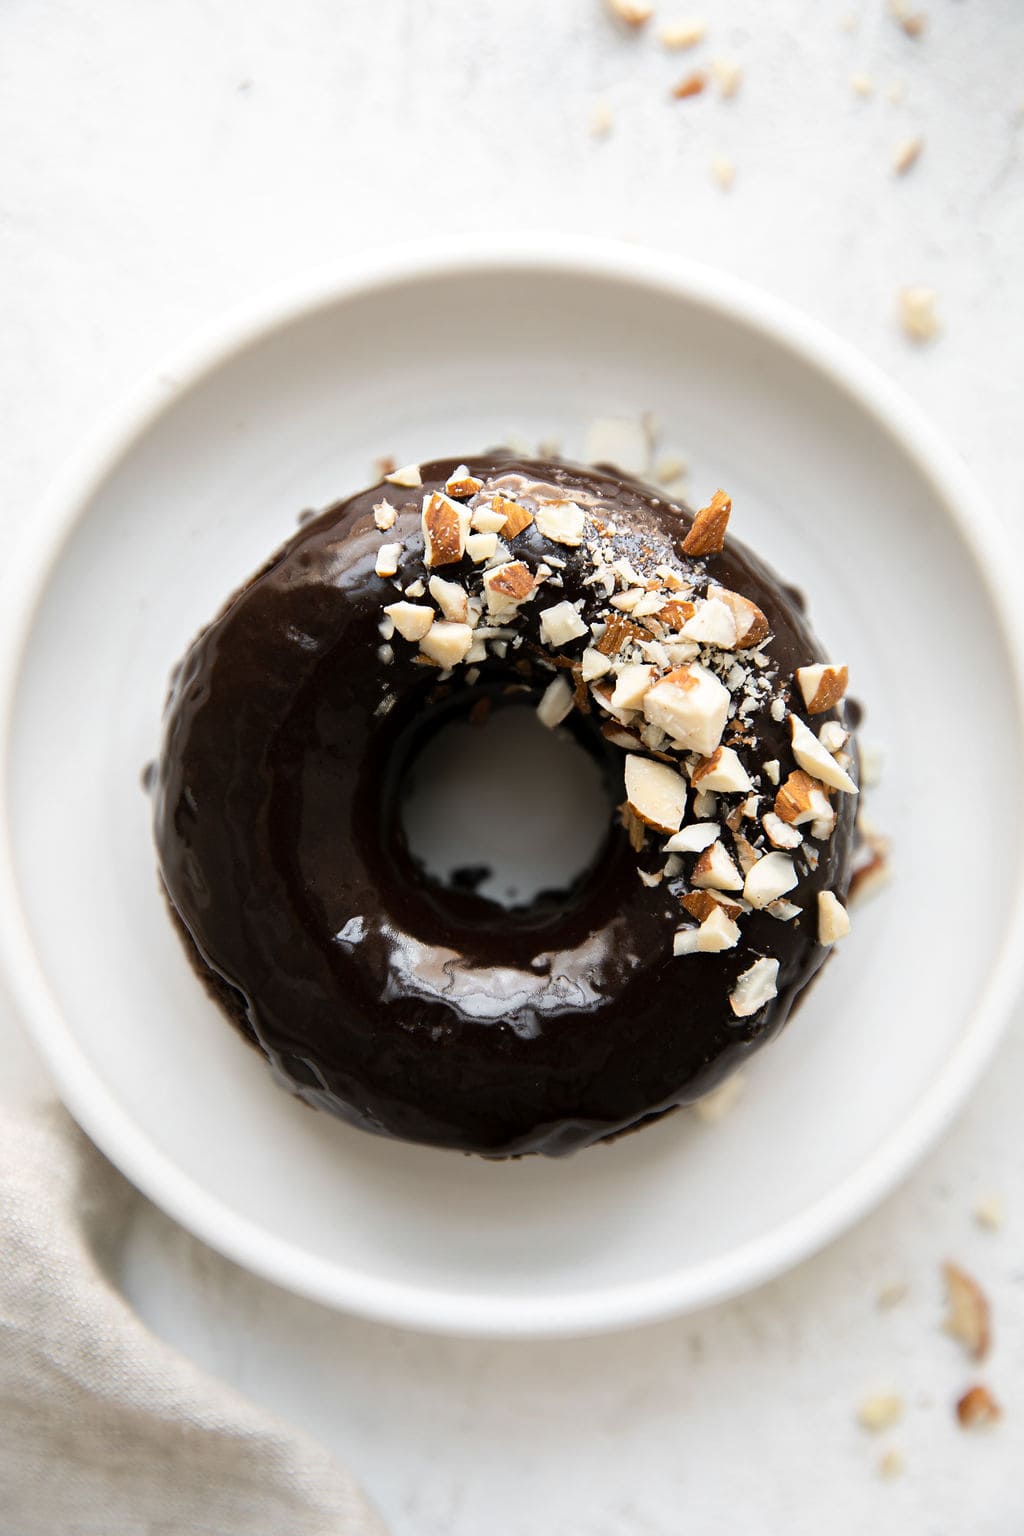 Donut Chocolate Bar Silicone Mold